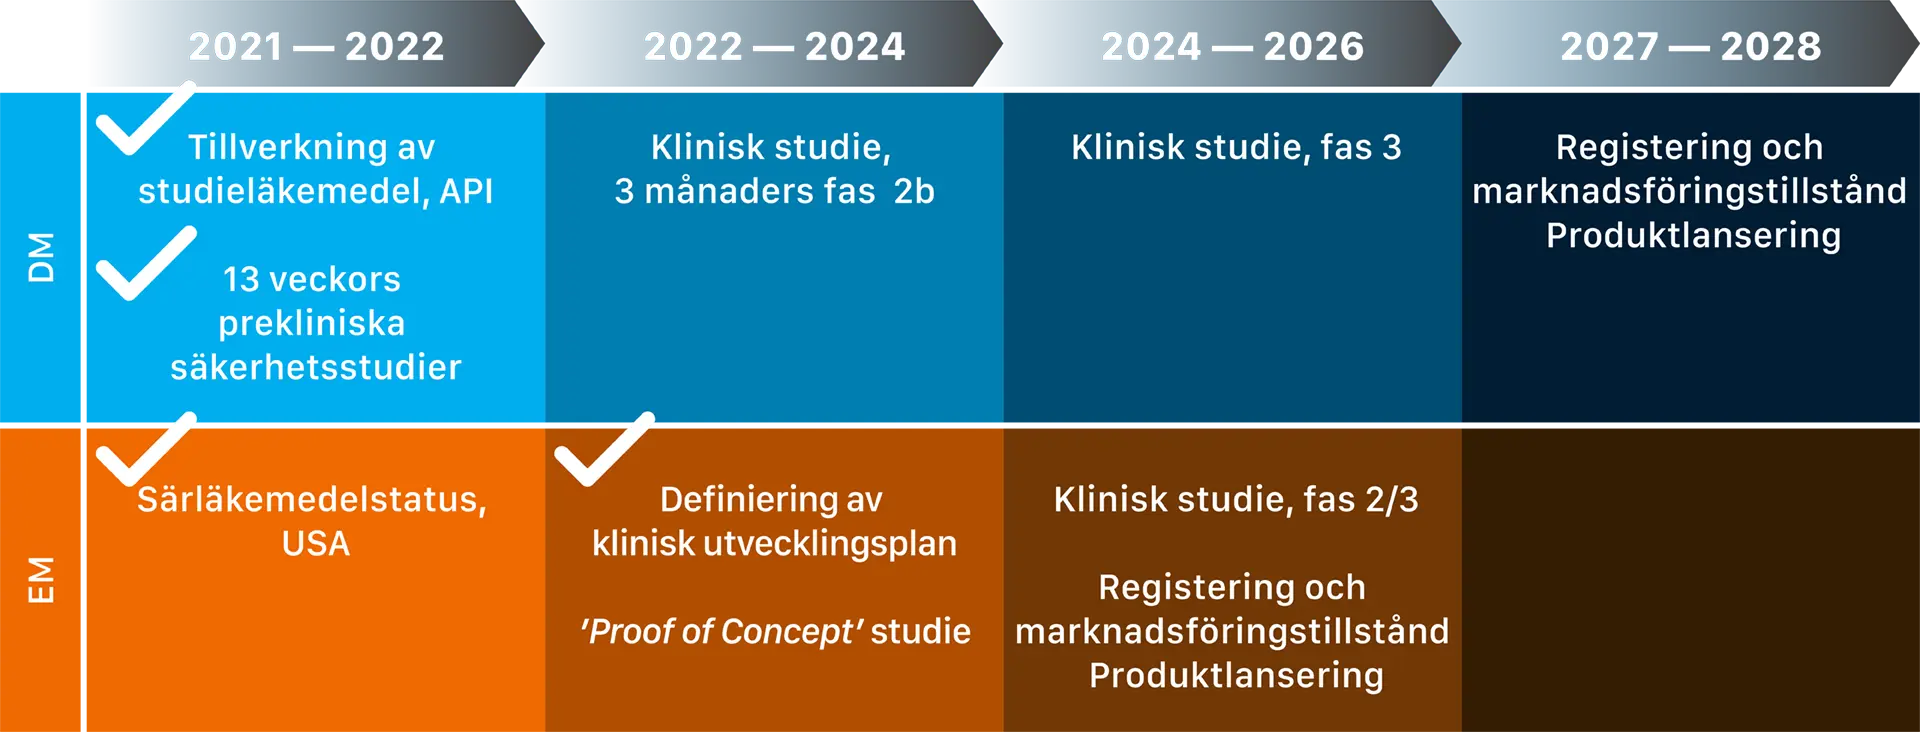 Timeline Pila Pharma 2023